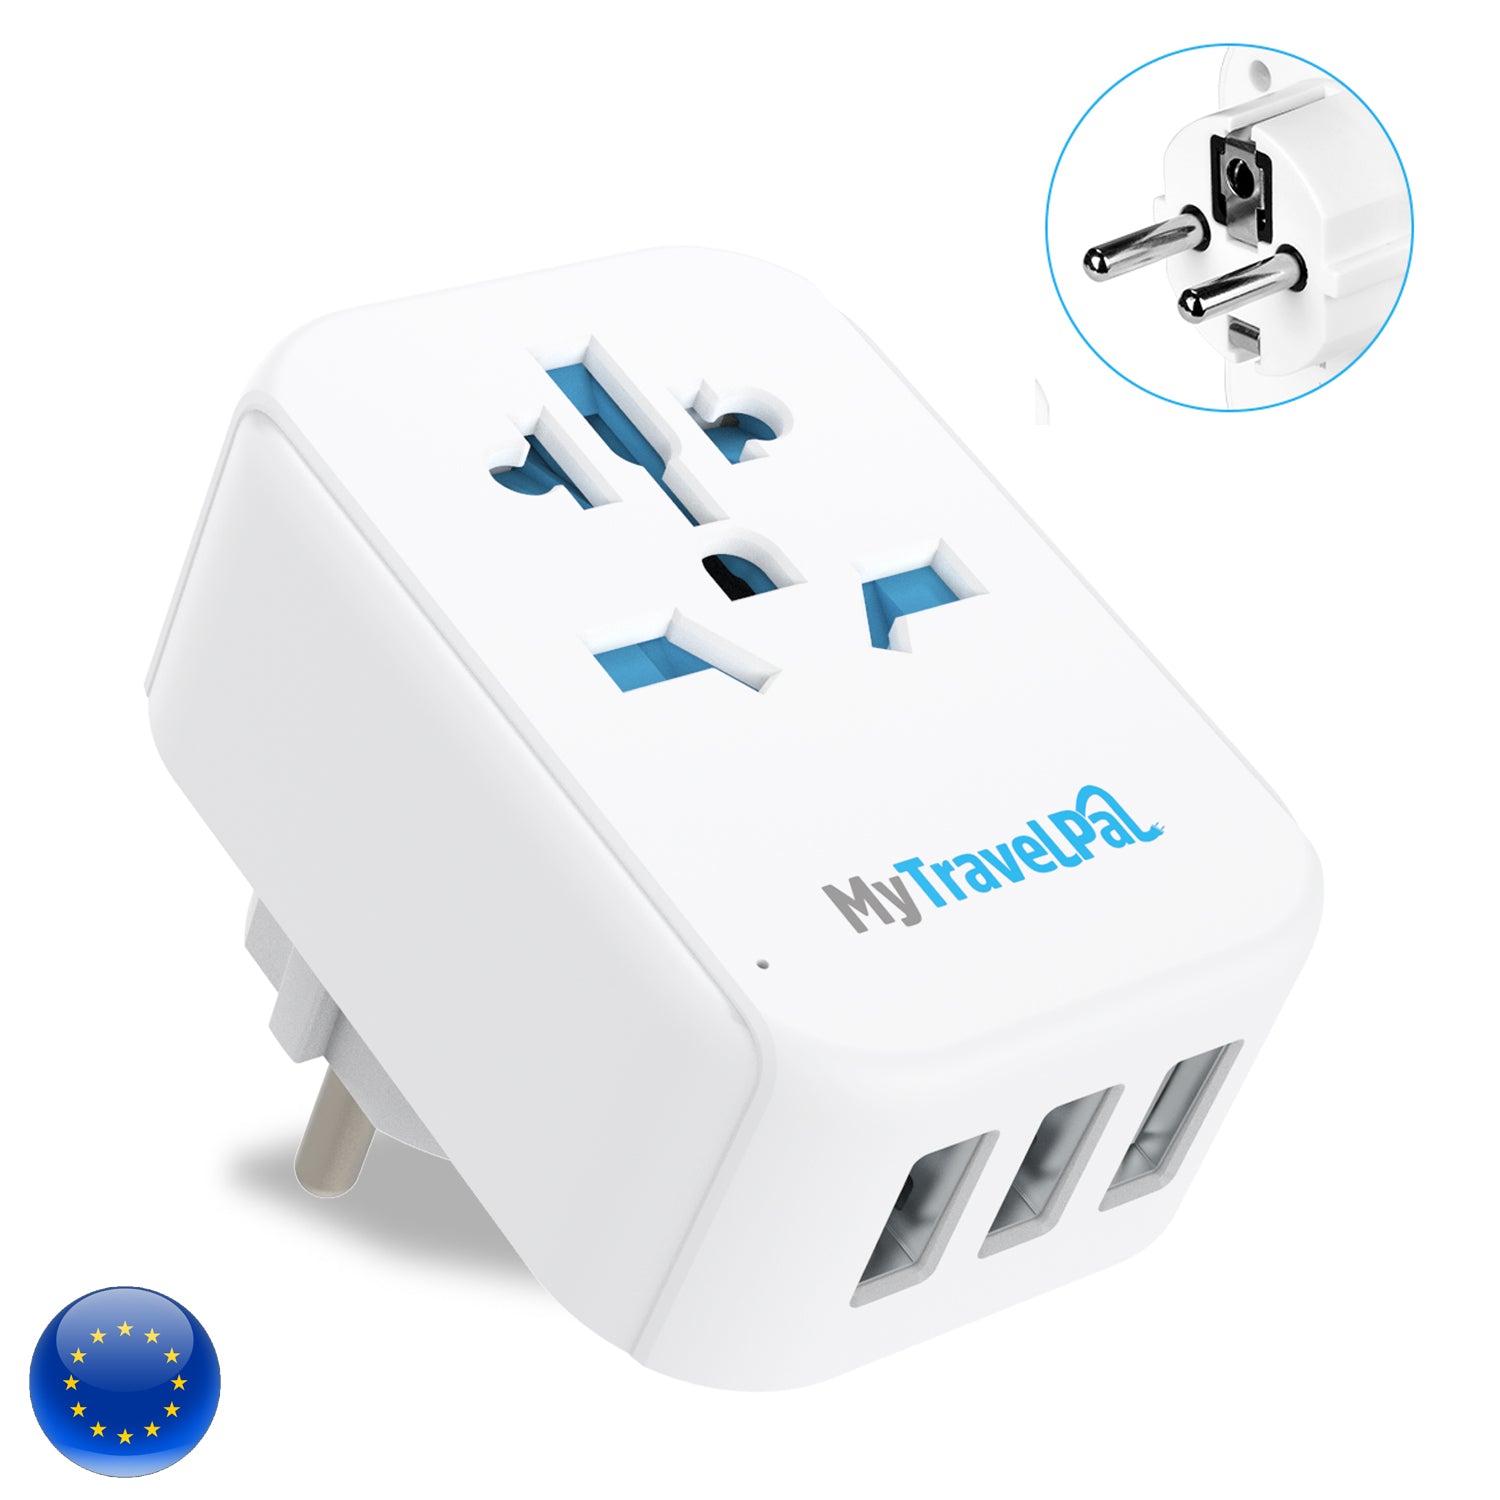 European Travel Adaptor With 3 USB Ports (Type E/F)